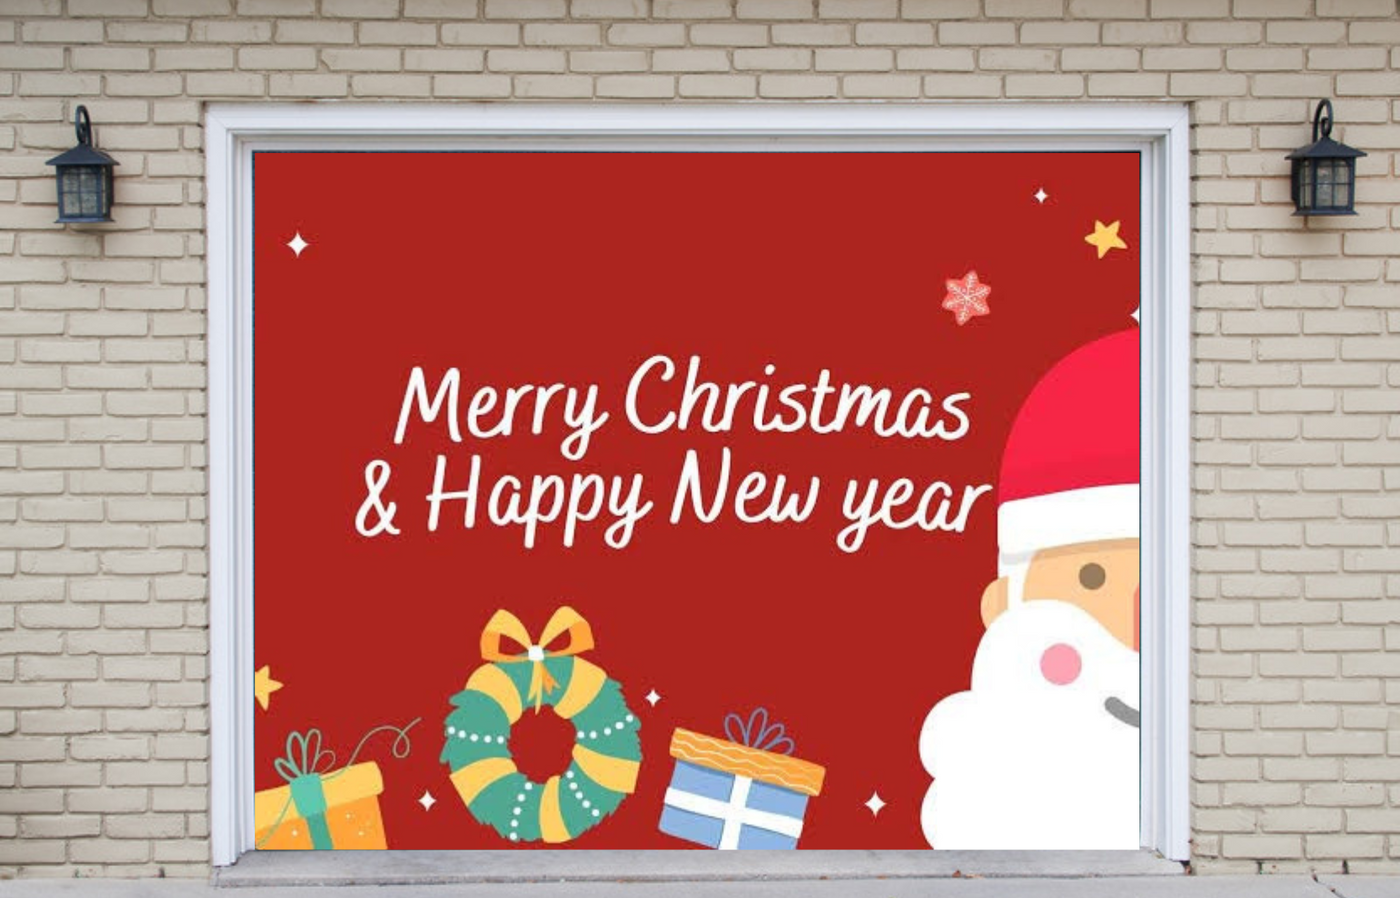 Merry Christmas & Happy New Year Santa Claus Garage Door Cover Banner Backdrop